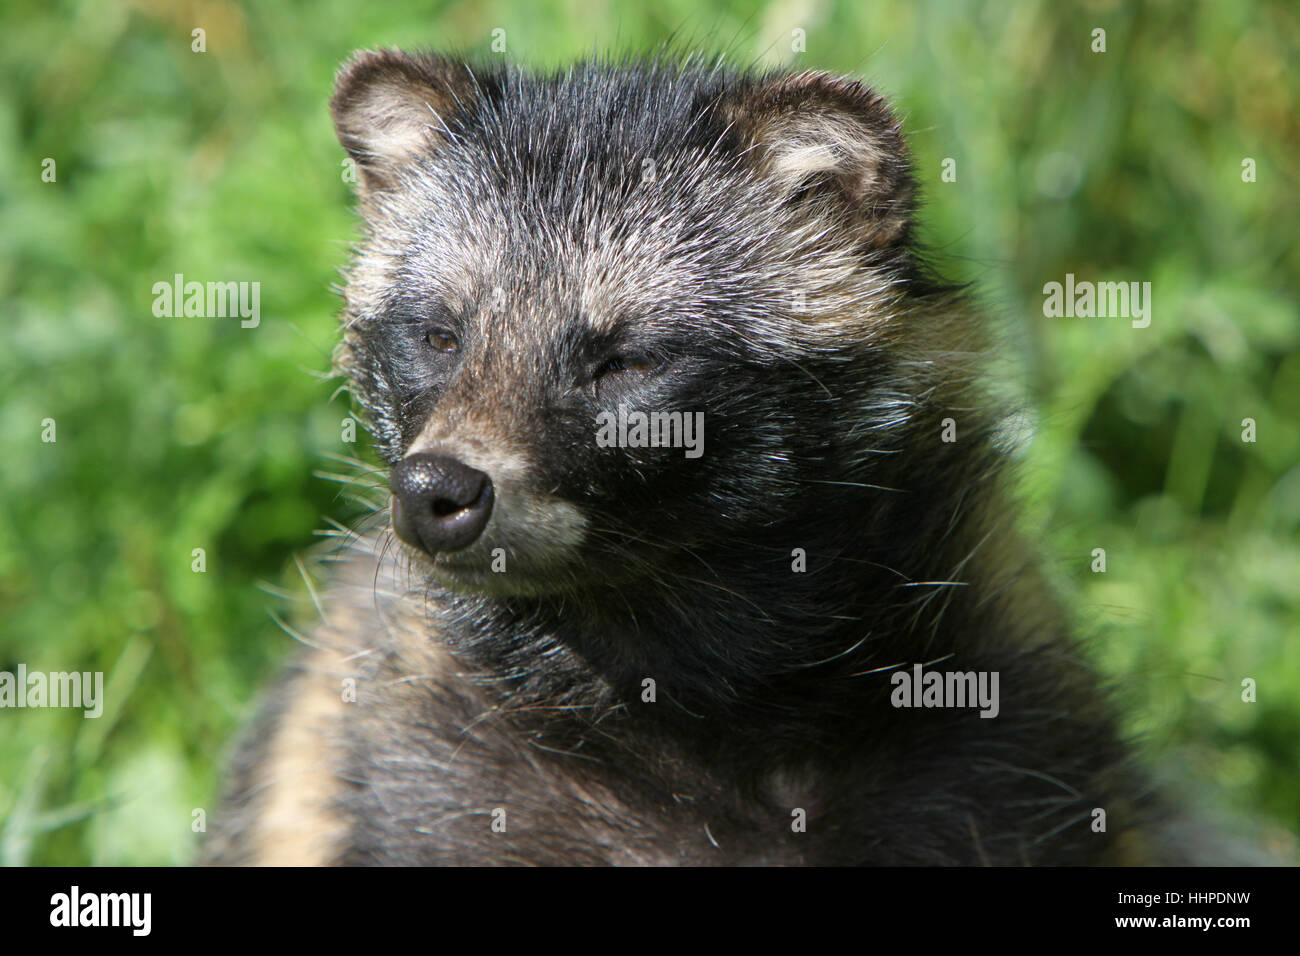 animal, asia, europe, skin, dog, predator, wild animal, forest, marderhund, Stock Photo